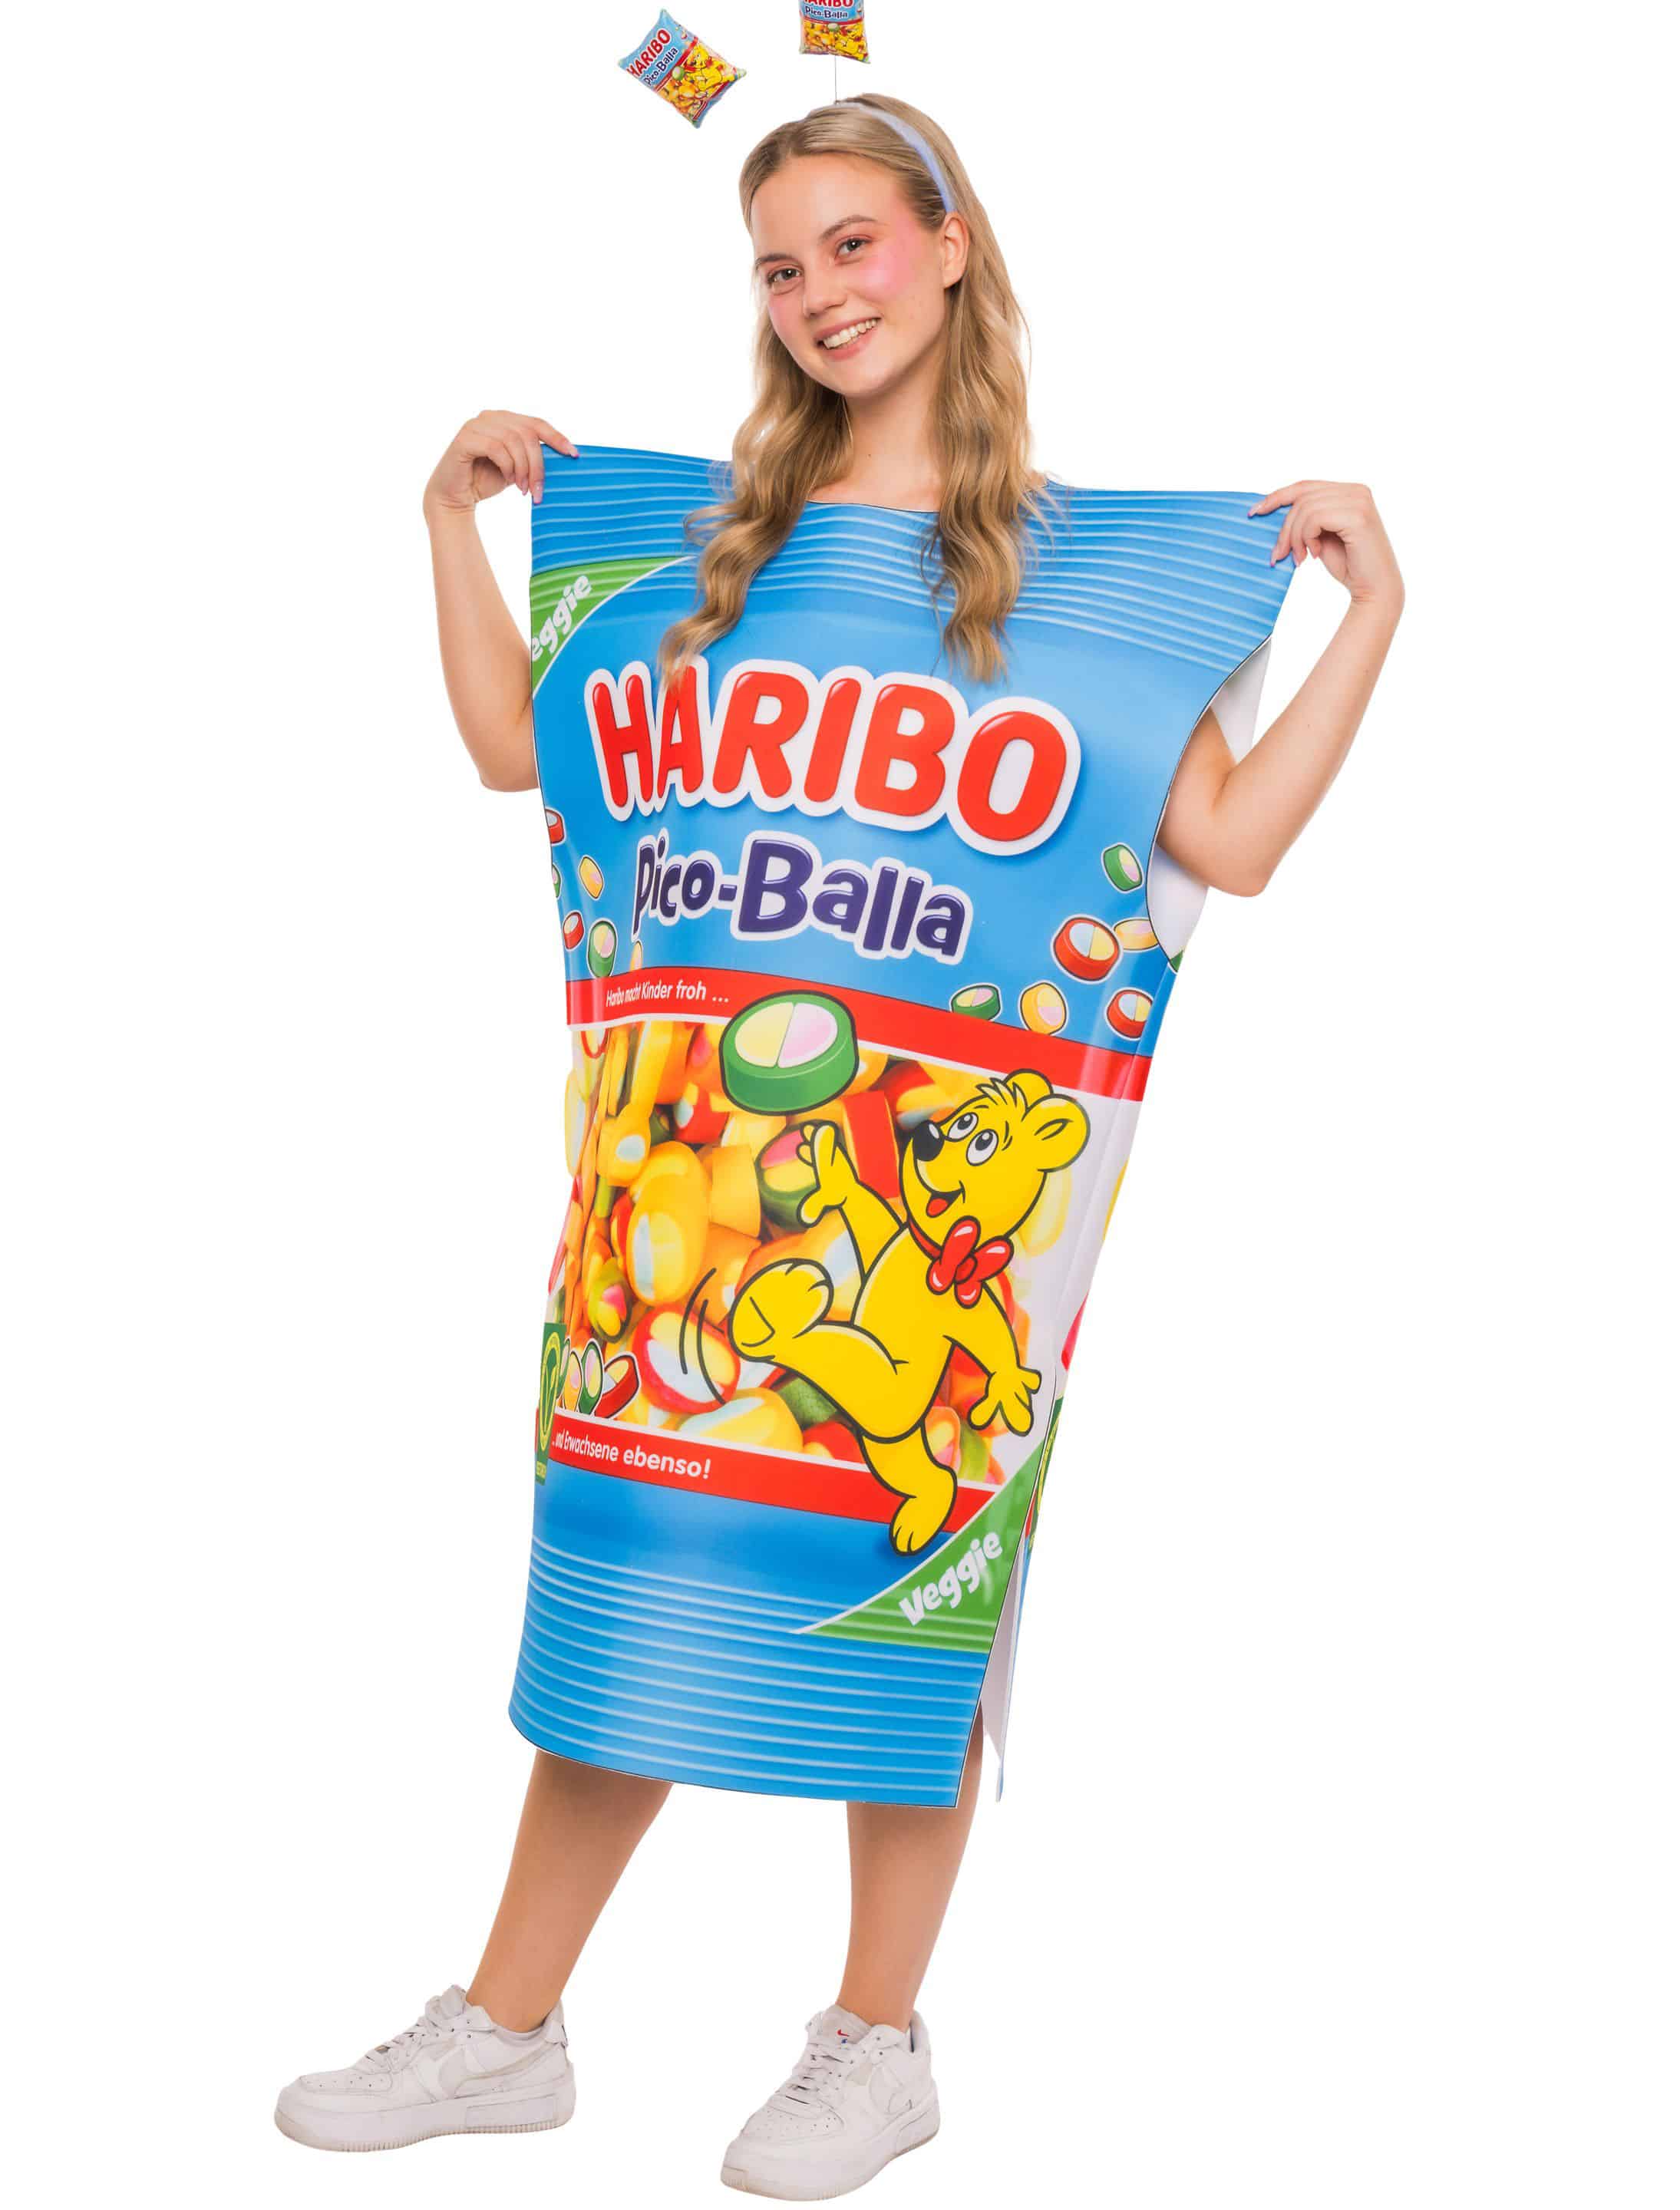 Kostüm HARIBO Pico-Balla Erwachsene bunt one size